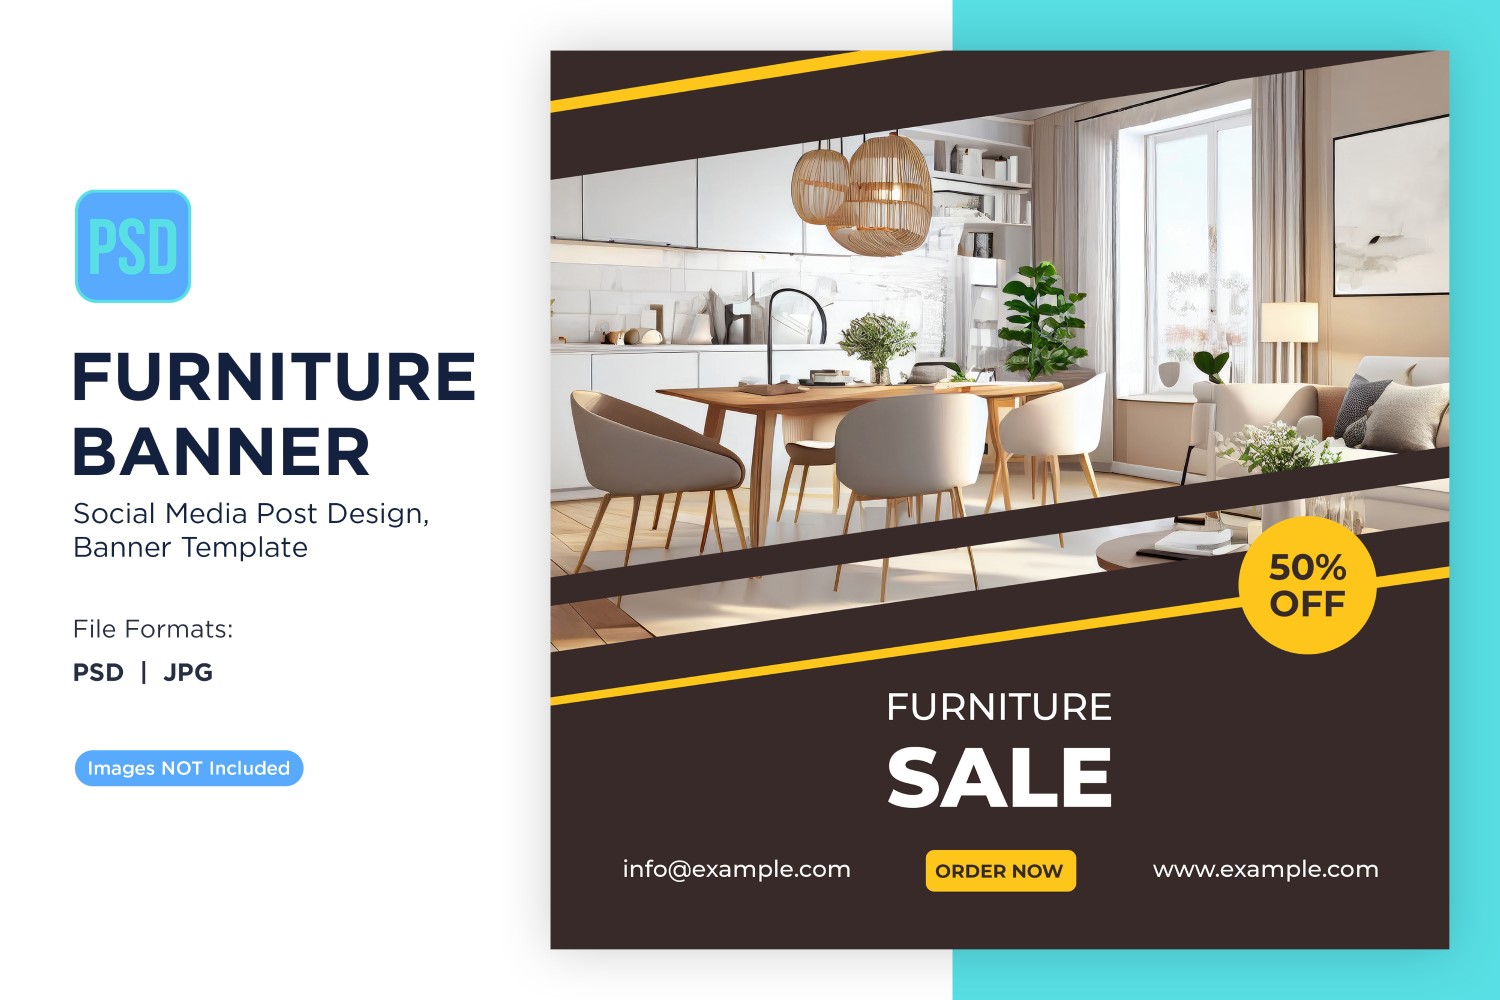 Furniture Sale Banner Design Template